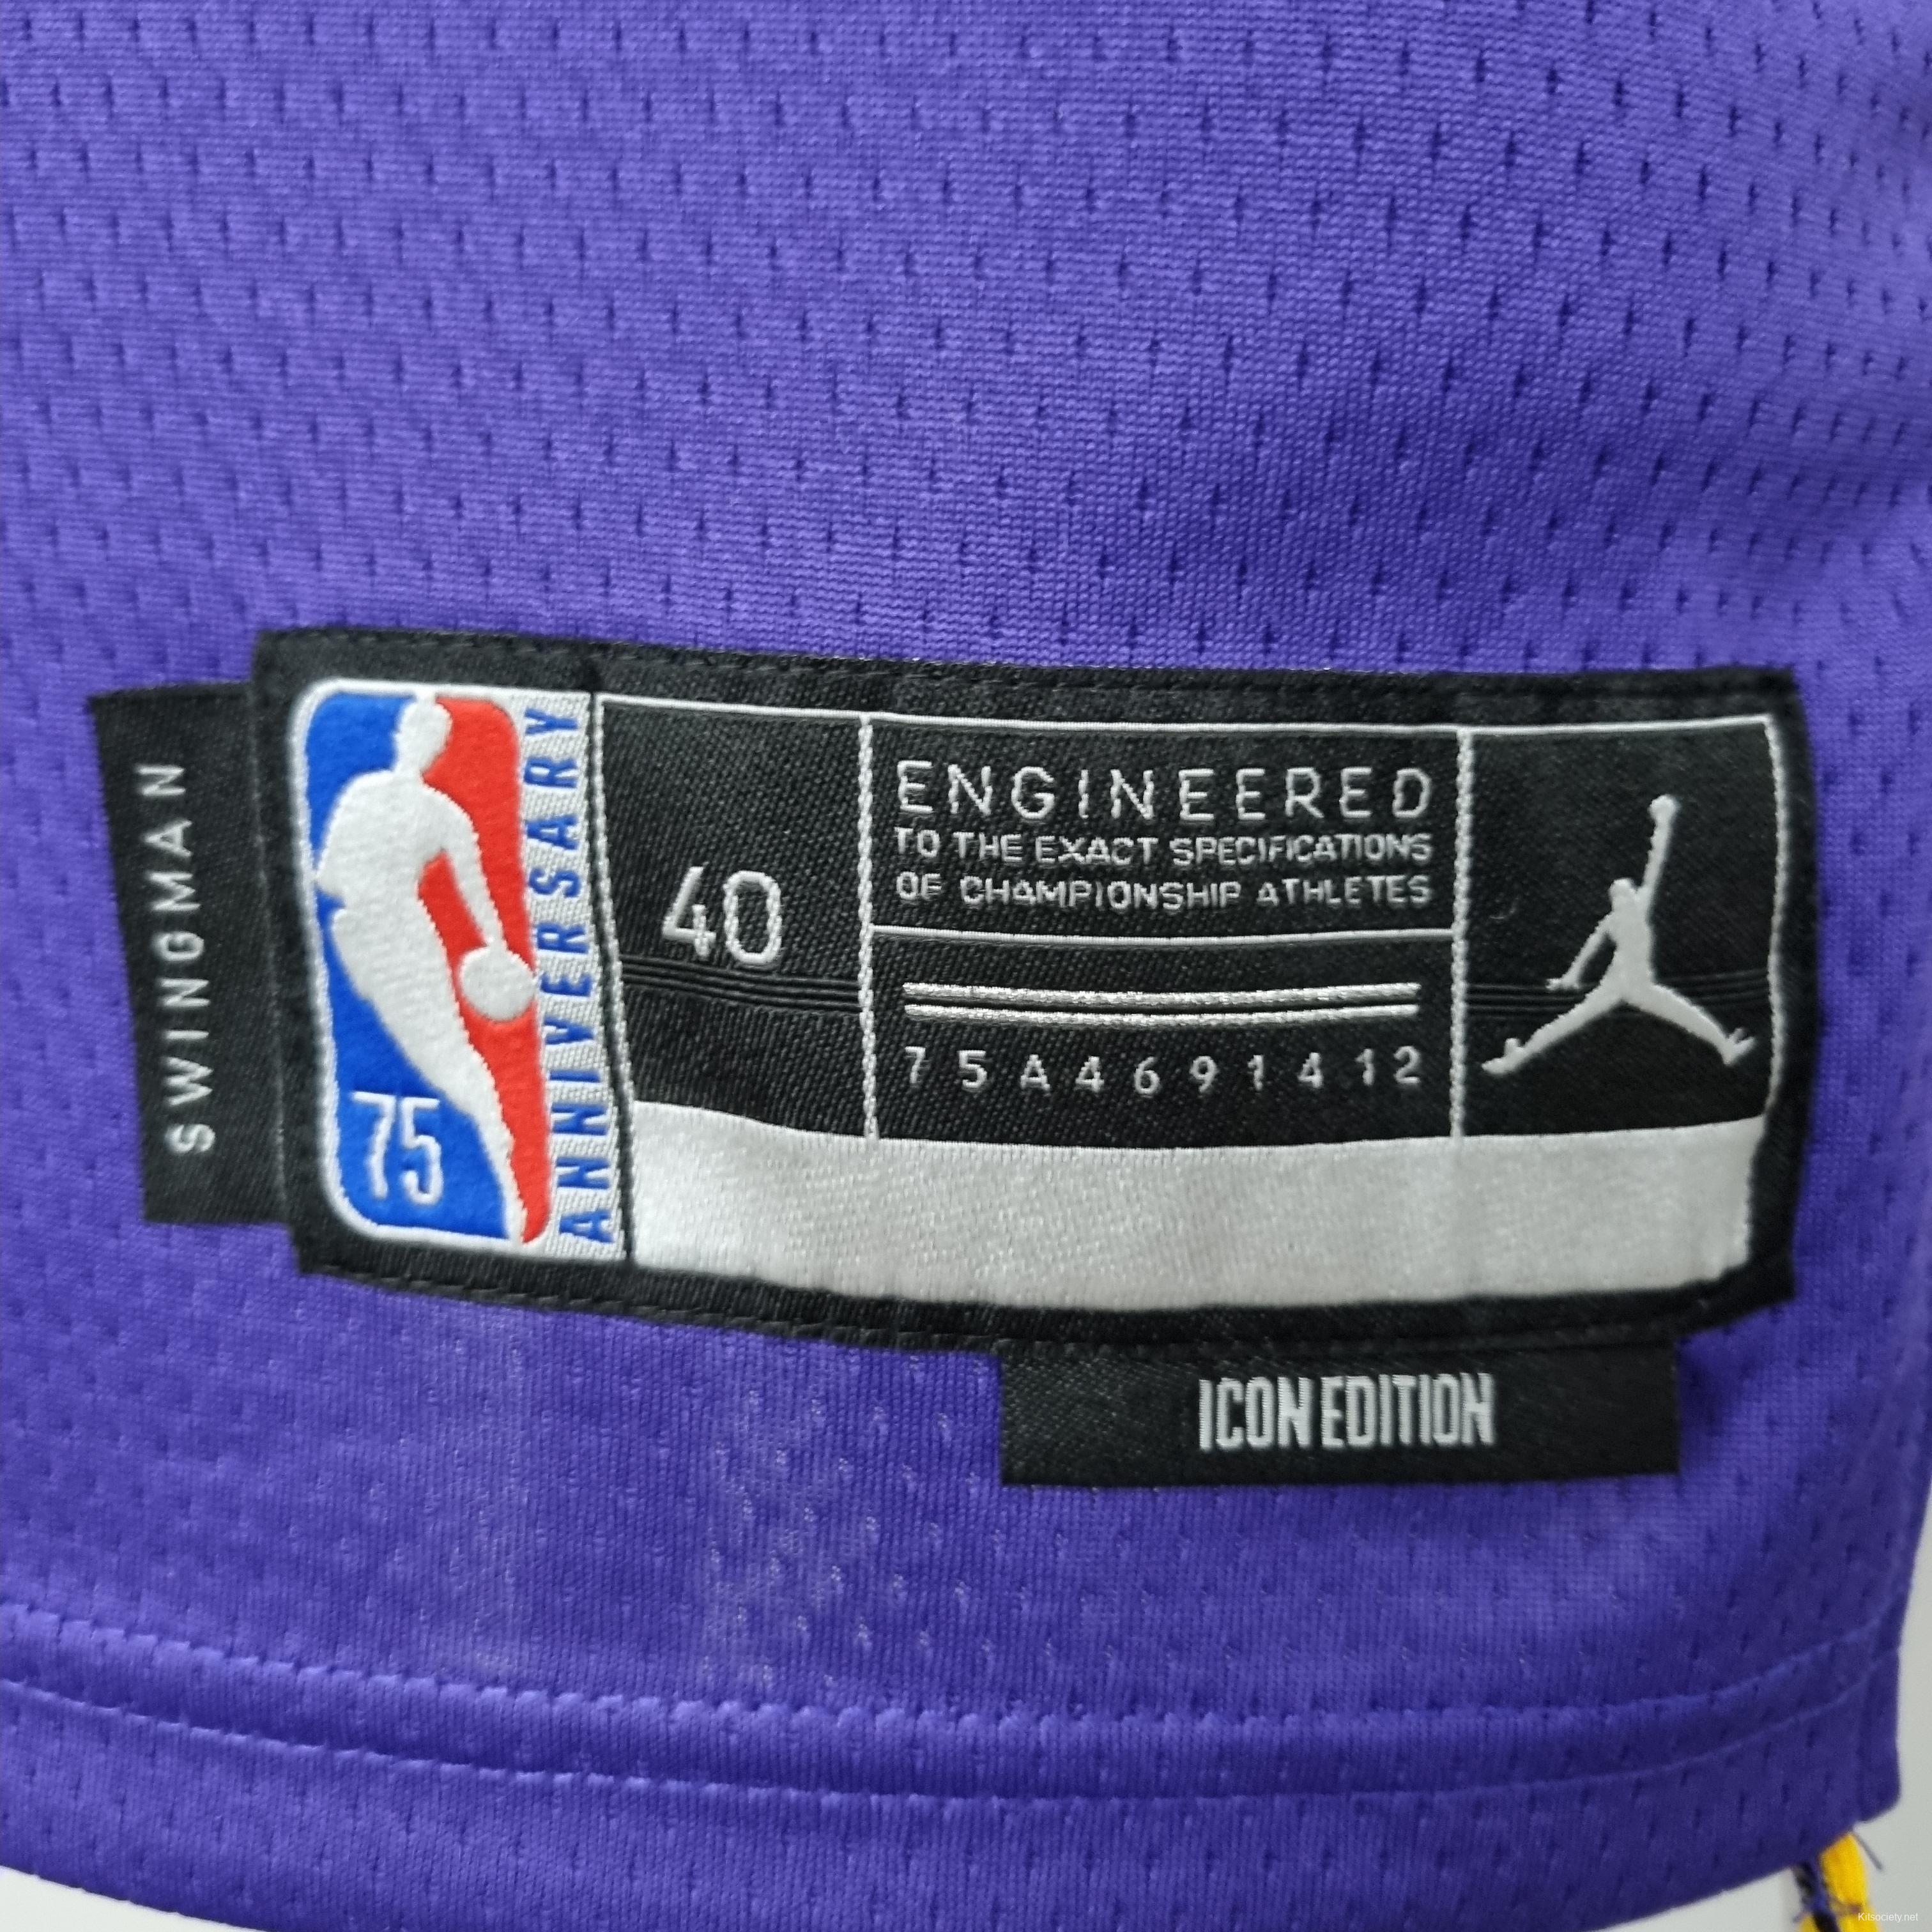 westbrook purple jersey